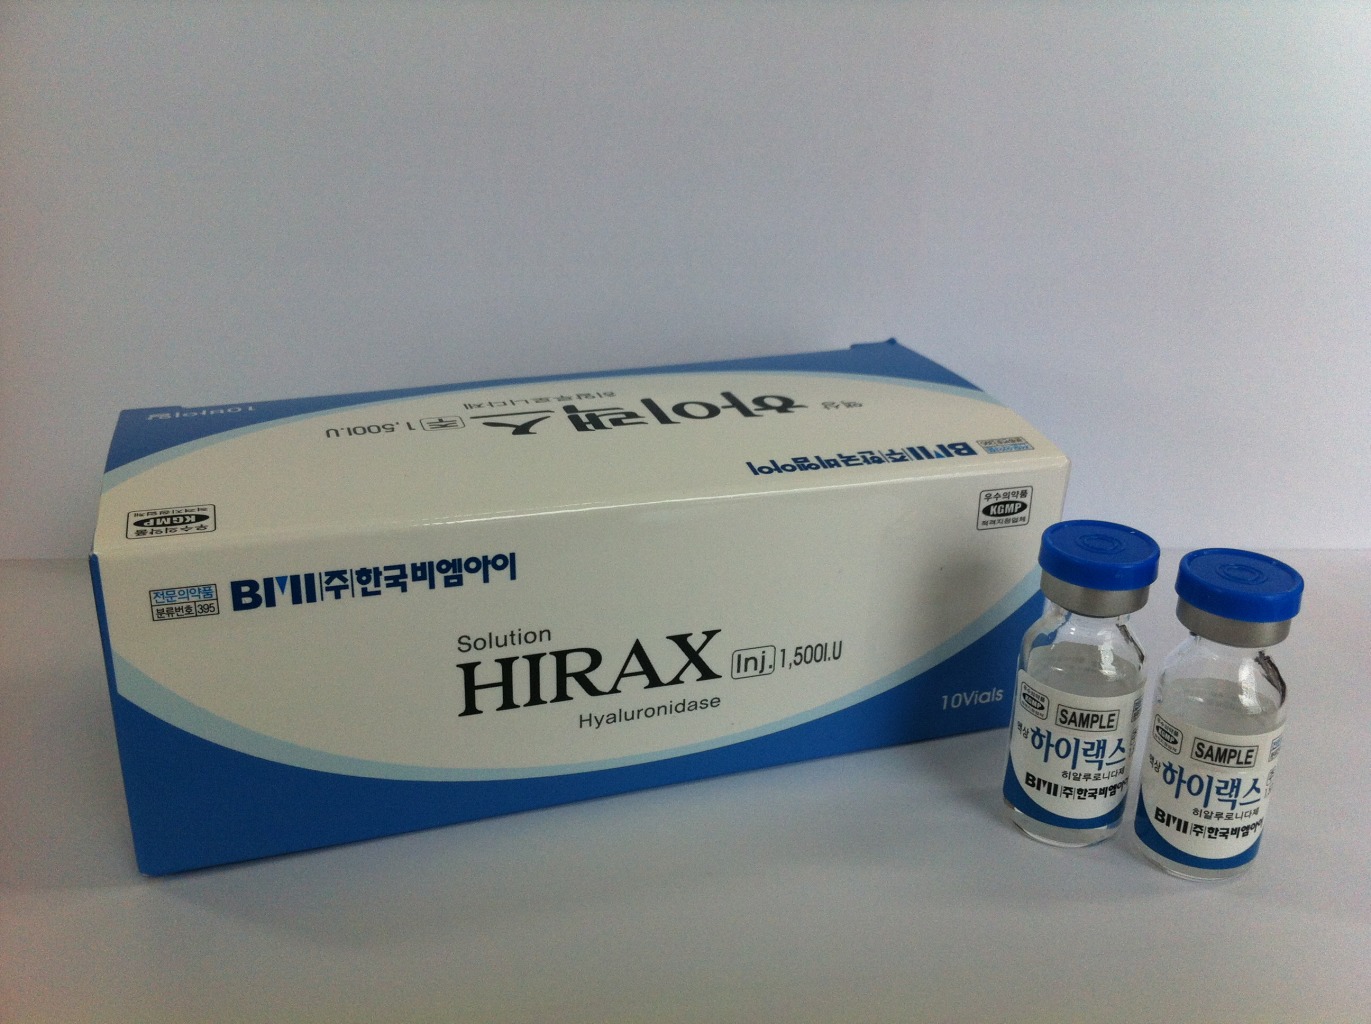 Highly purified liquid Hyaluronidase (Hirax)